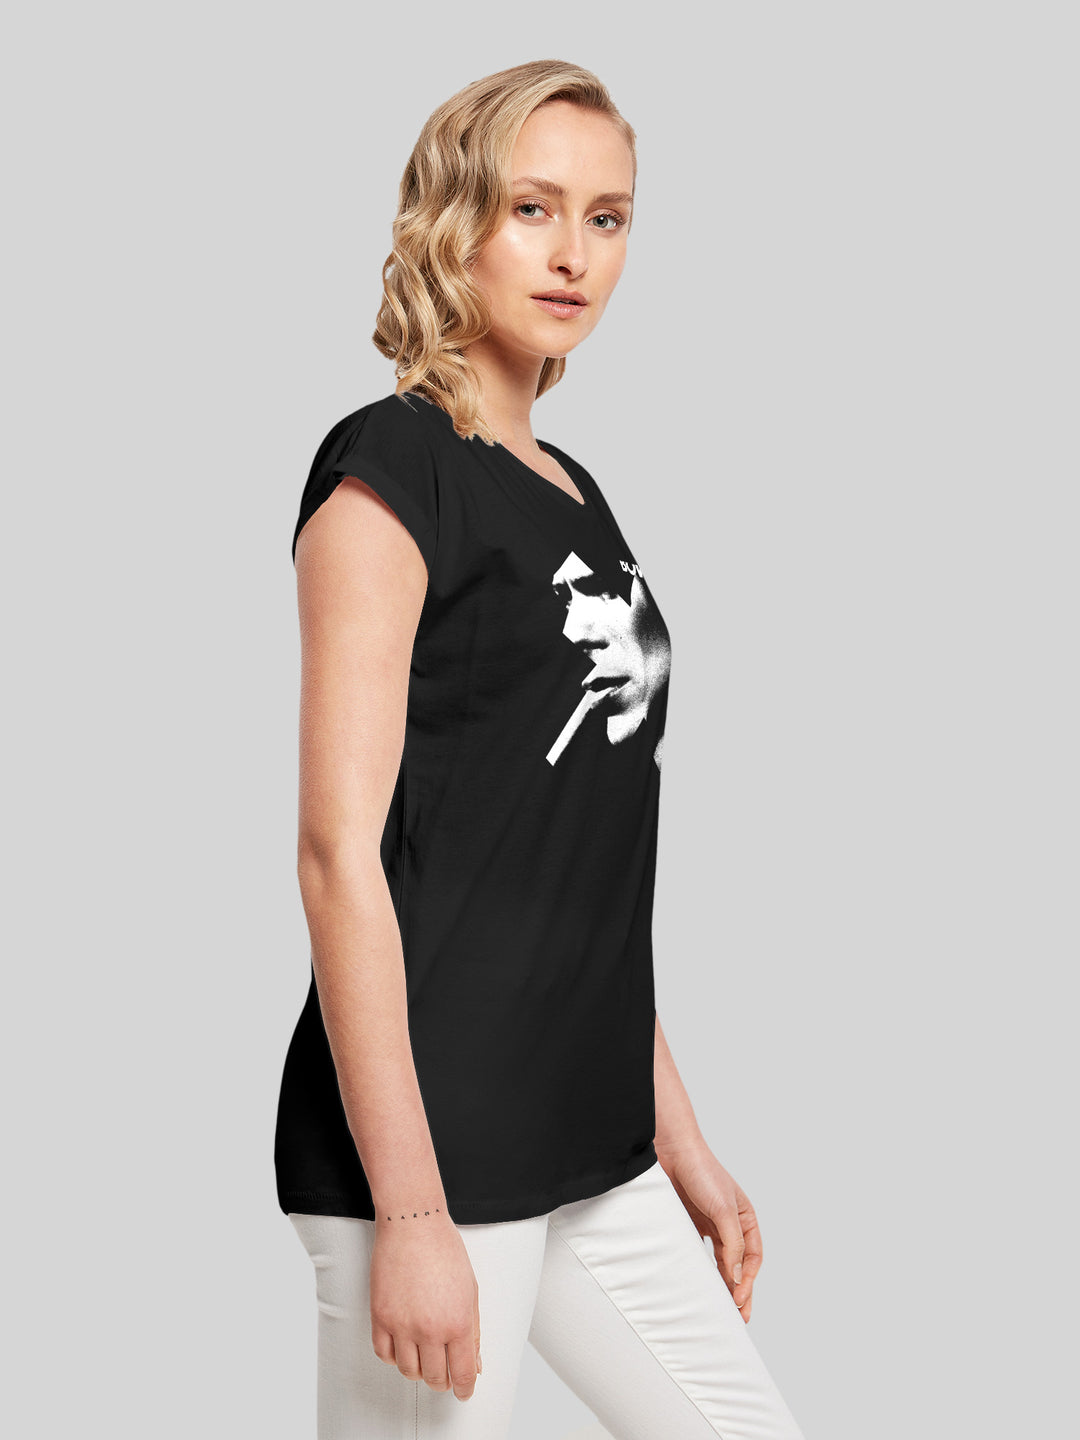 David Bowie T-Shirt | Cross Smoke | Premium Short Sleeve Ladies Tee